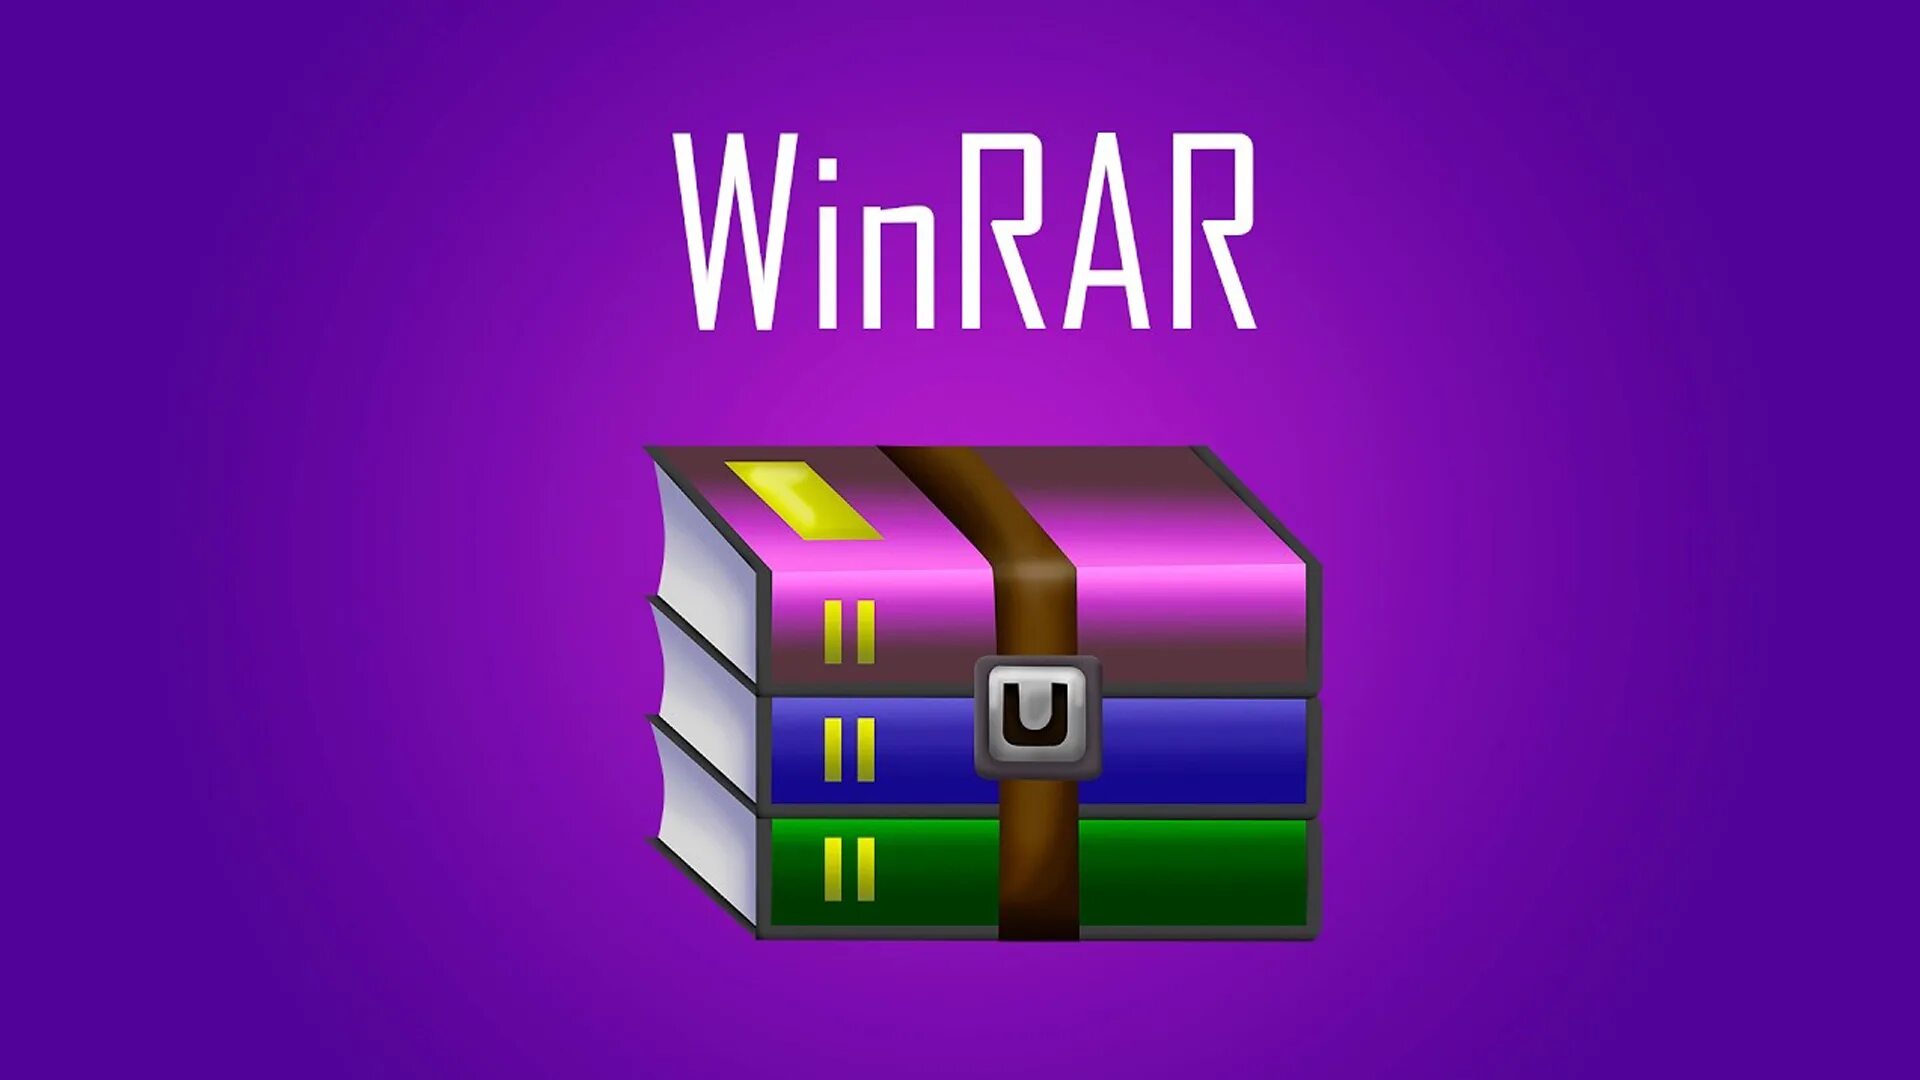 Flash rar. Архиватор WINRAR. WINRAR картинка. WINRAR логотип. Архиватор винрар.